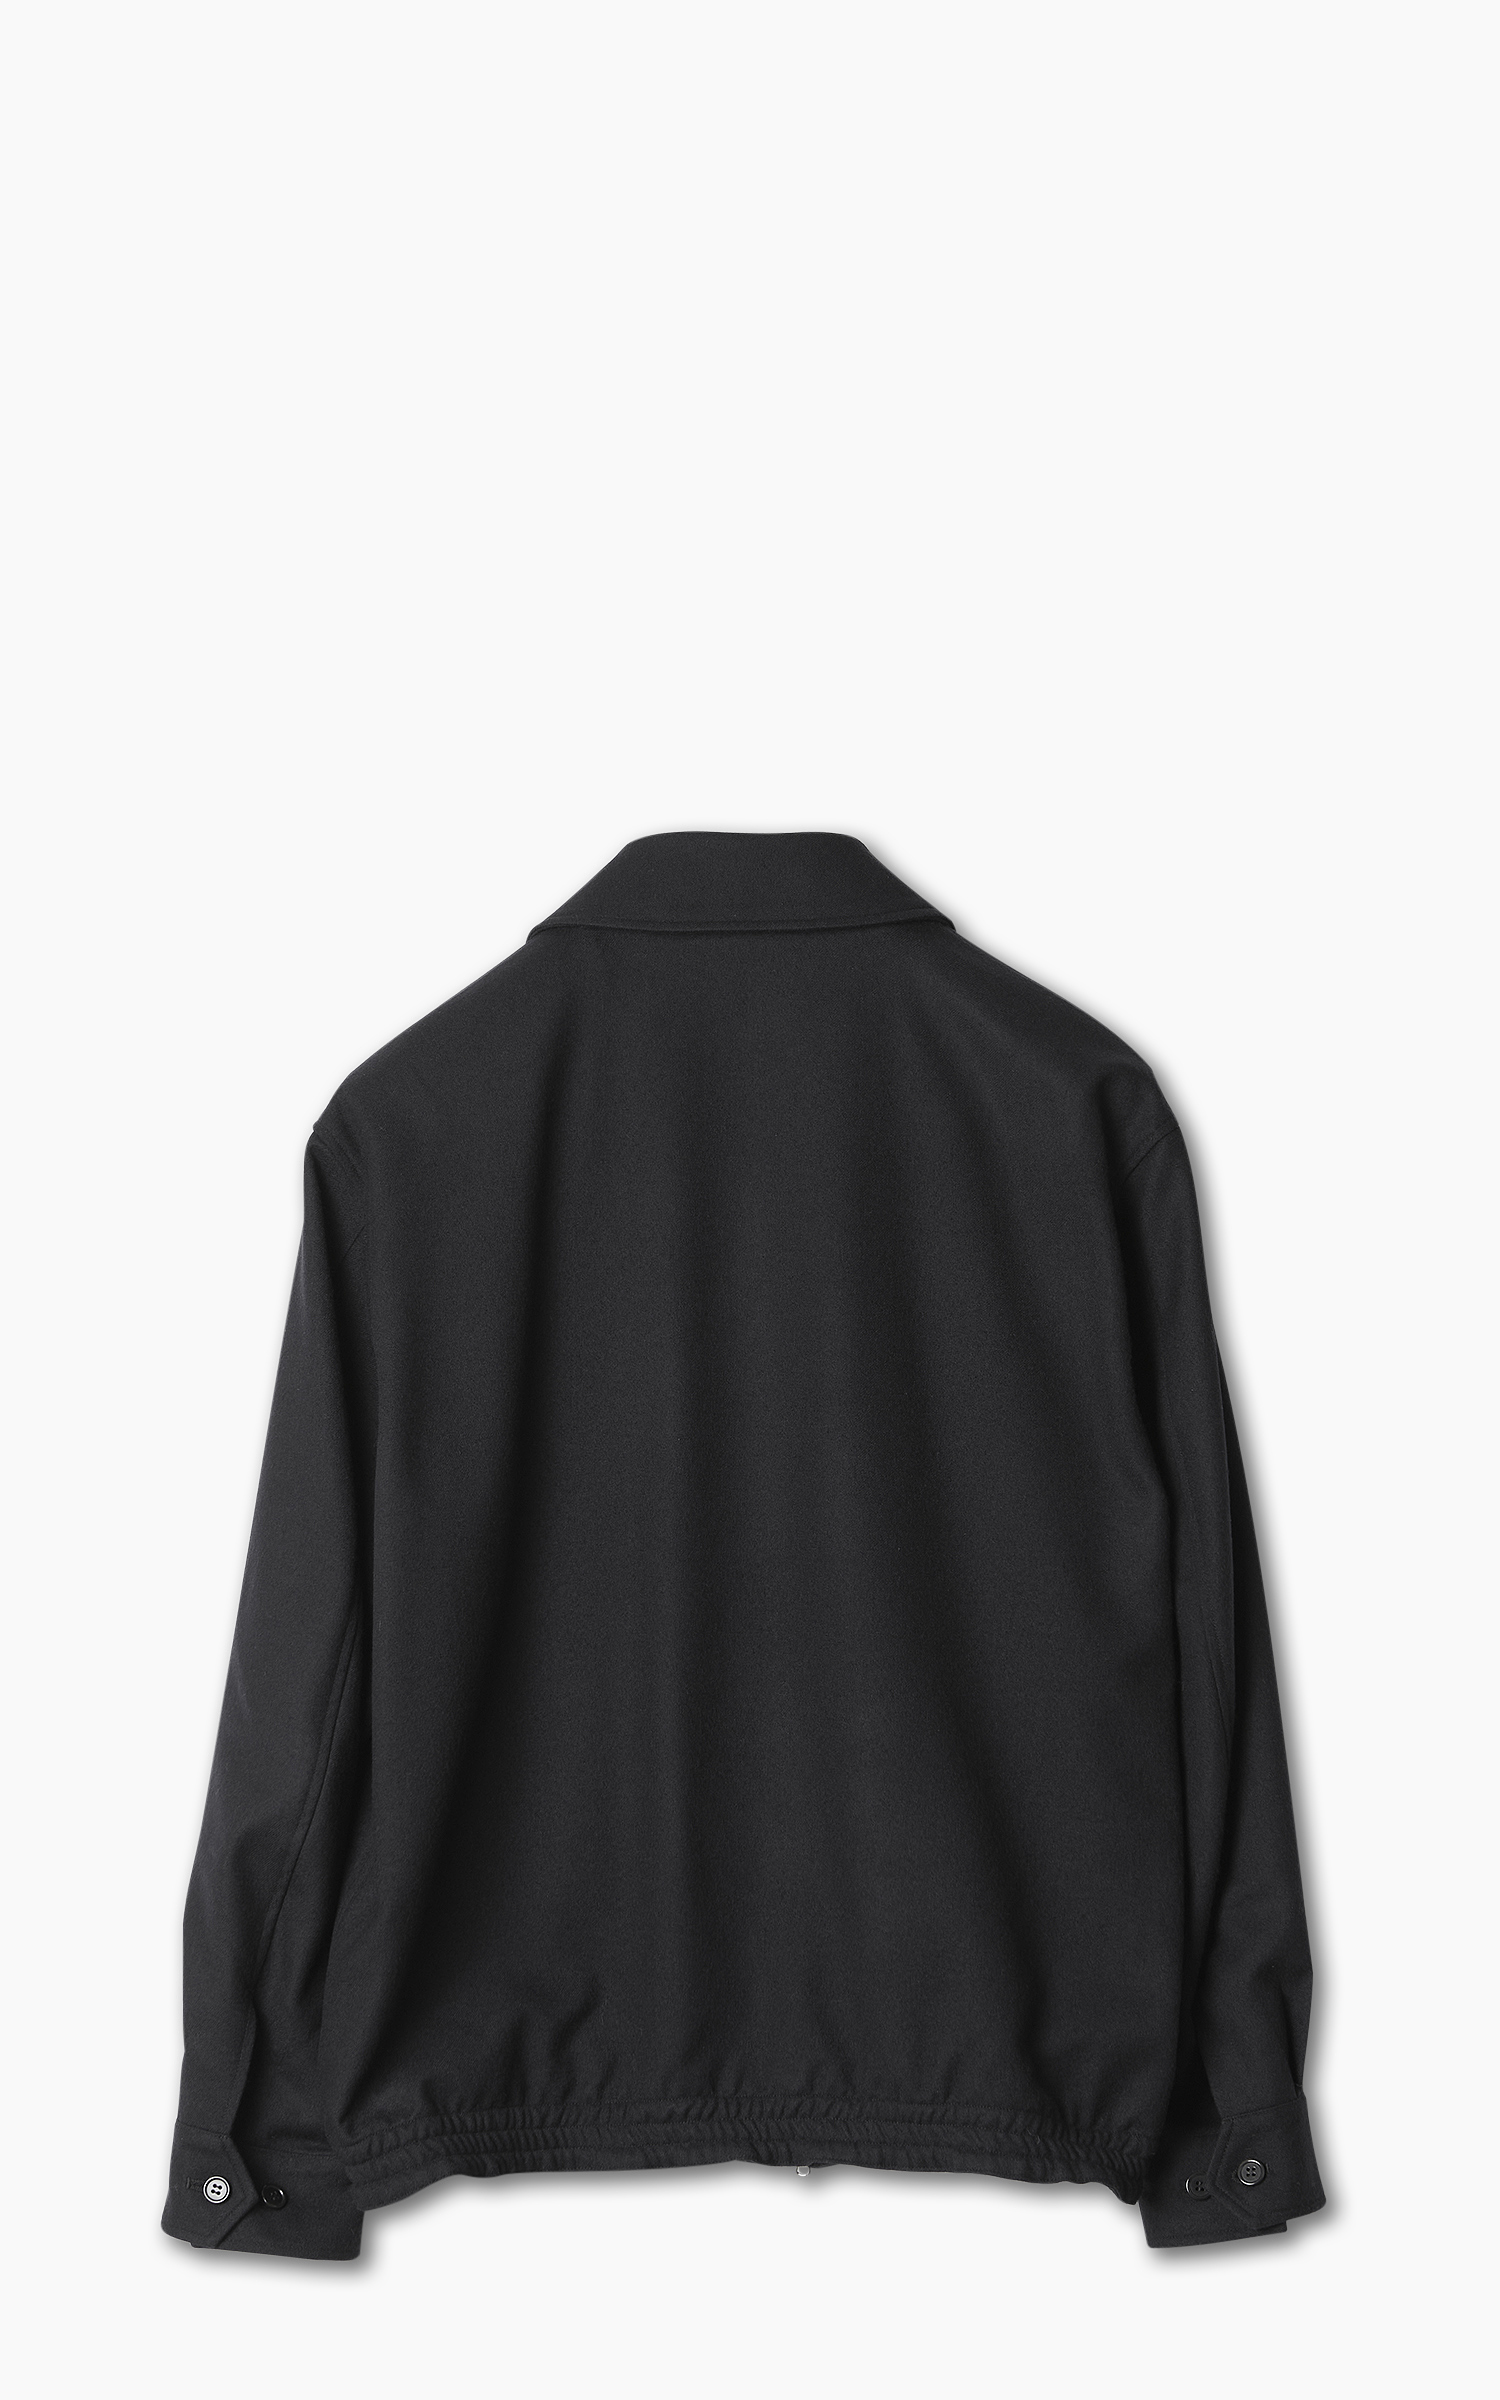 Flannel Sports Jacket Black